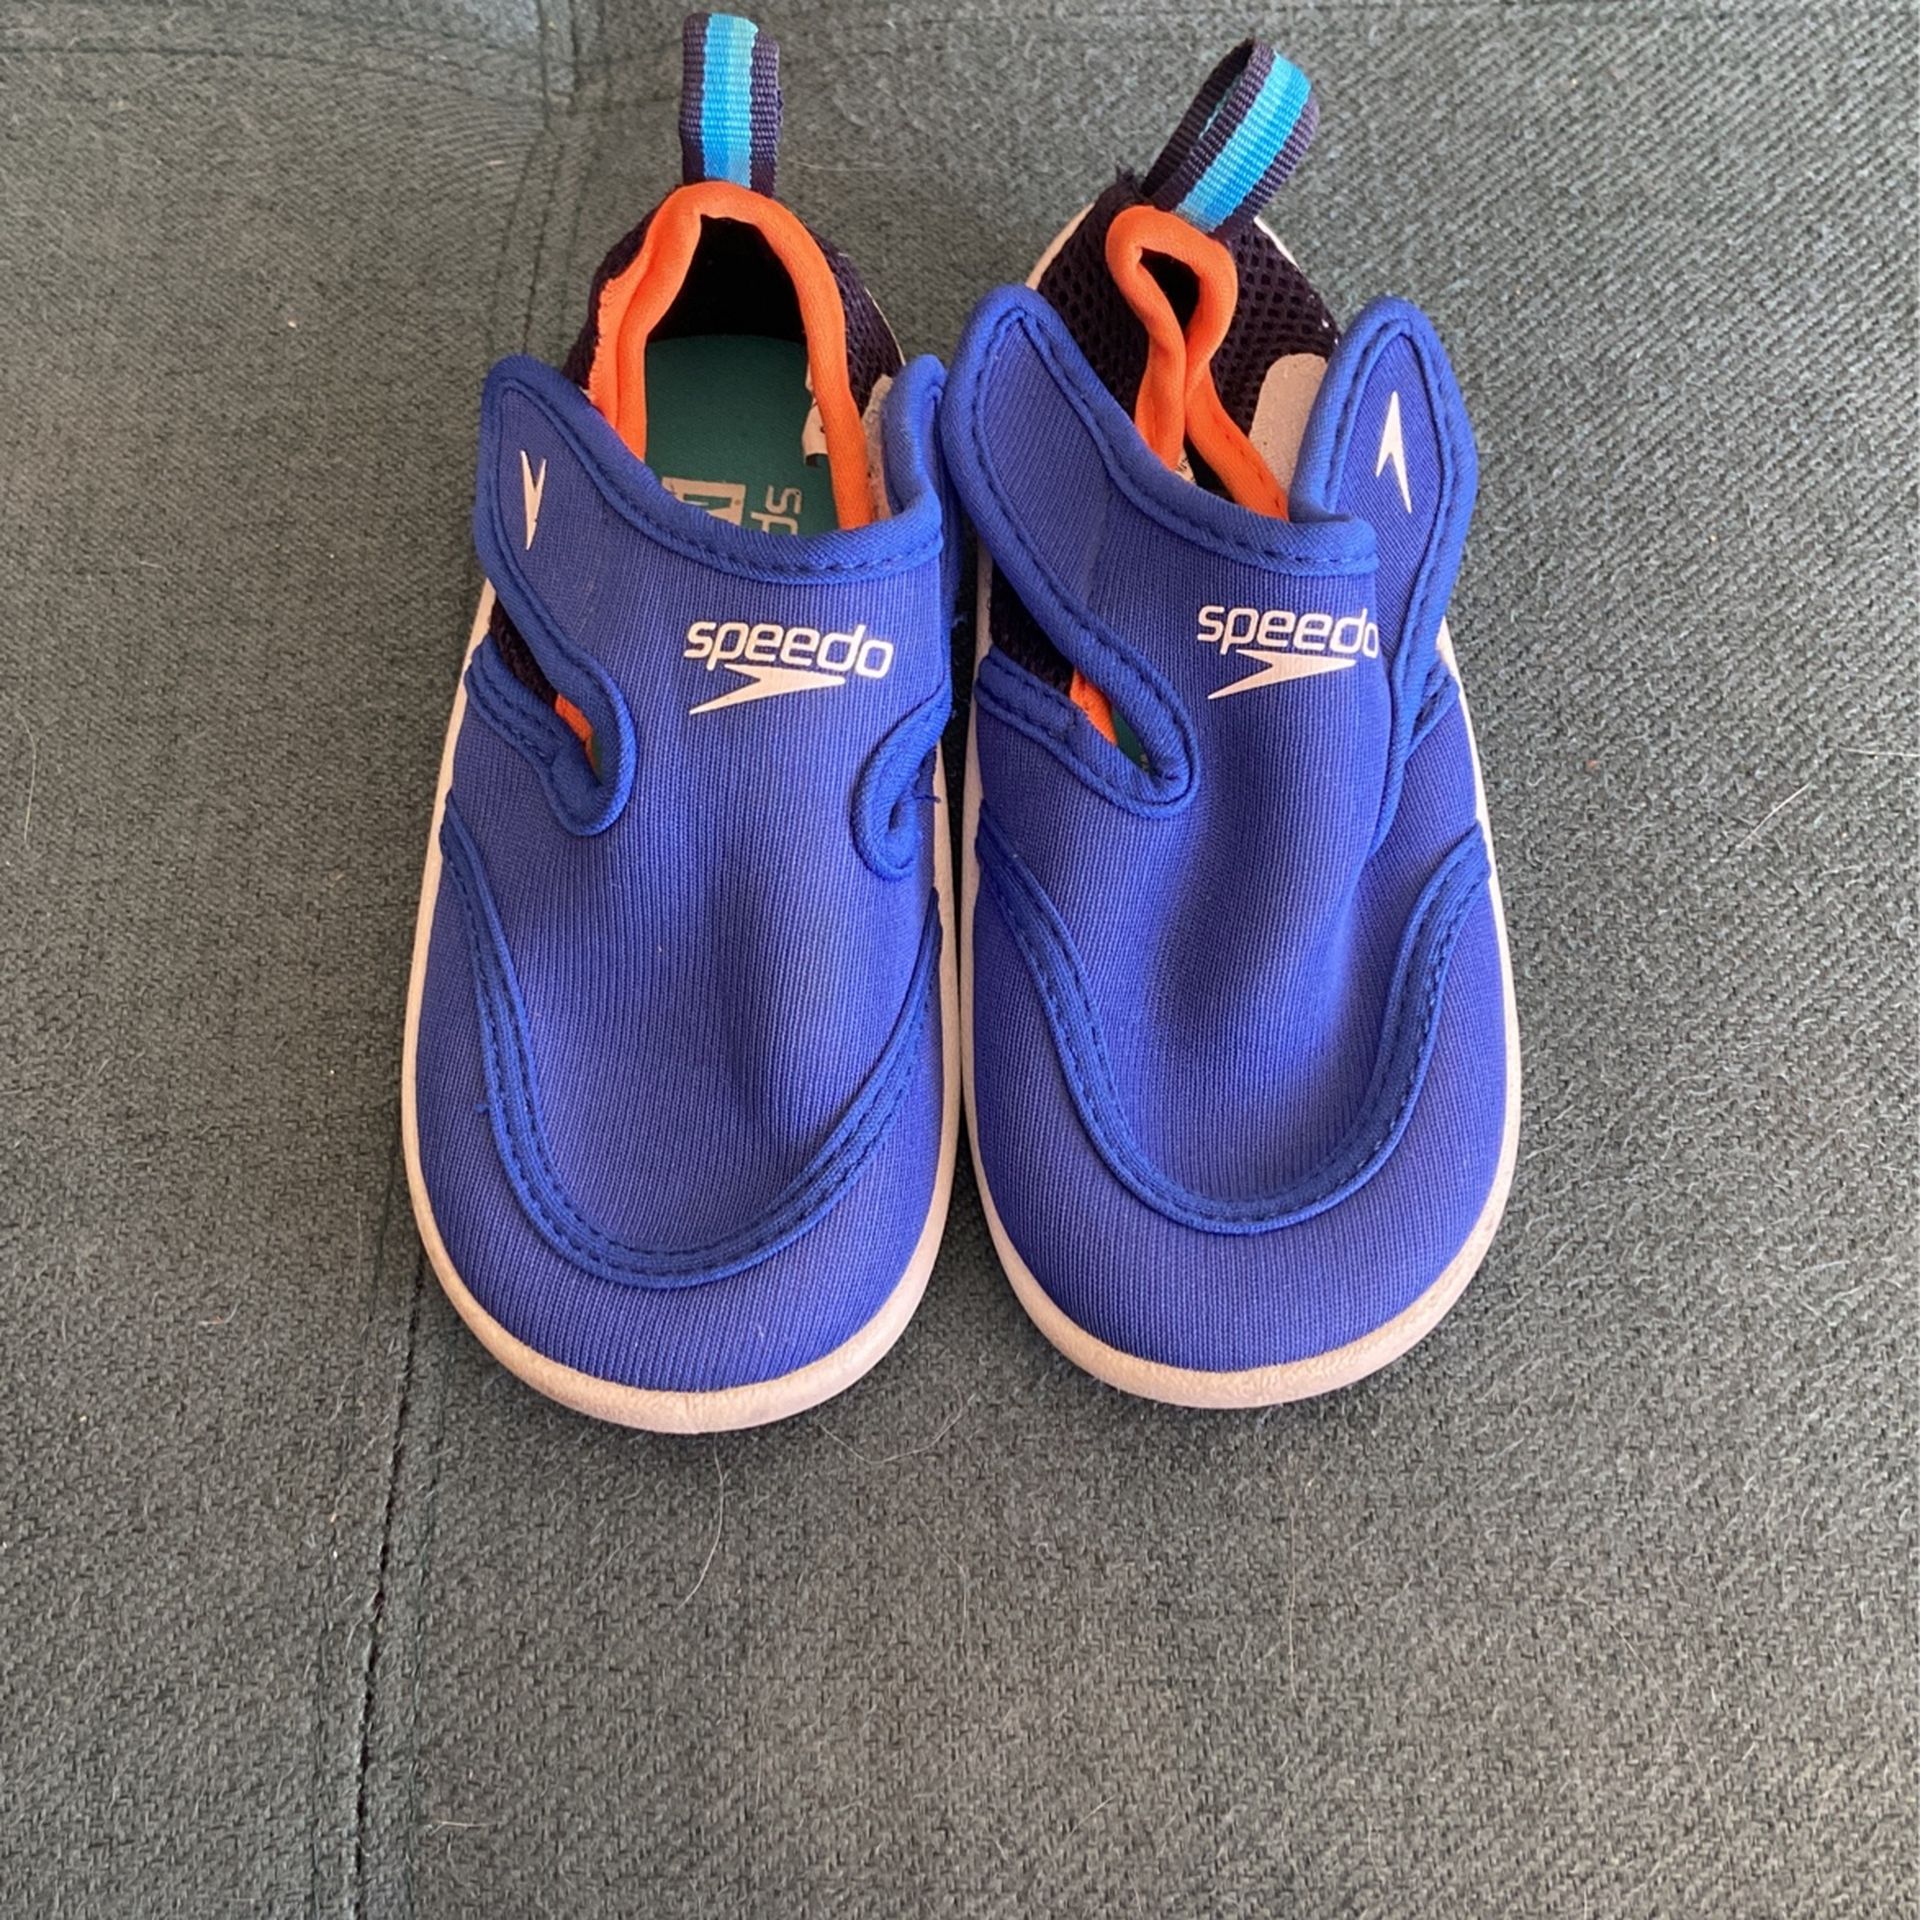 Toddler water shoes Speedo